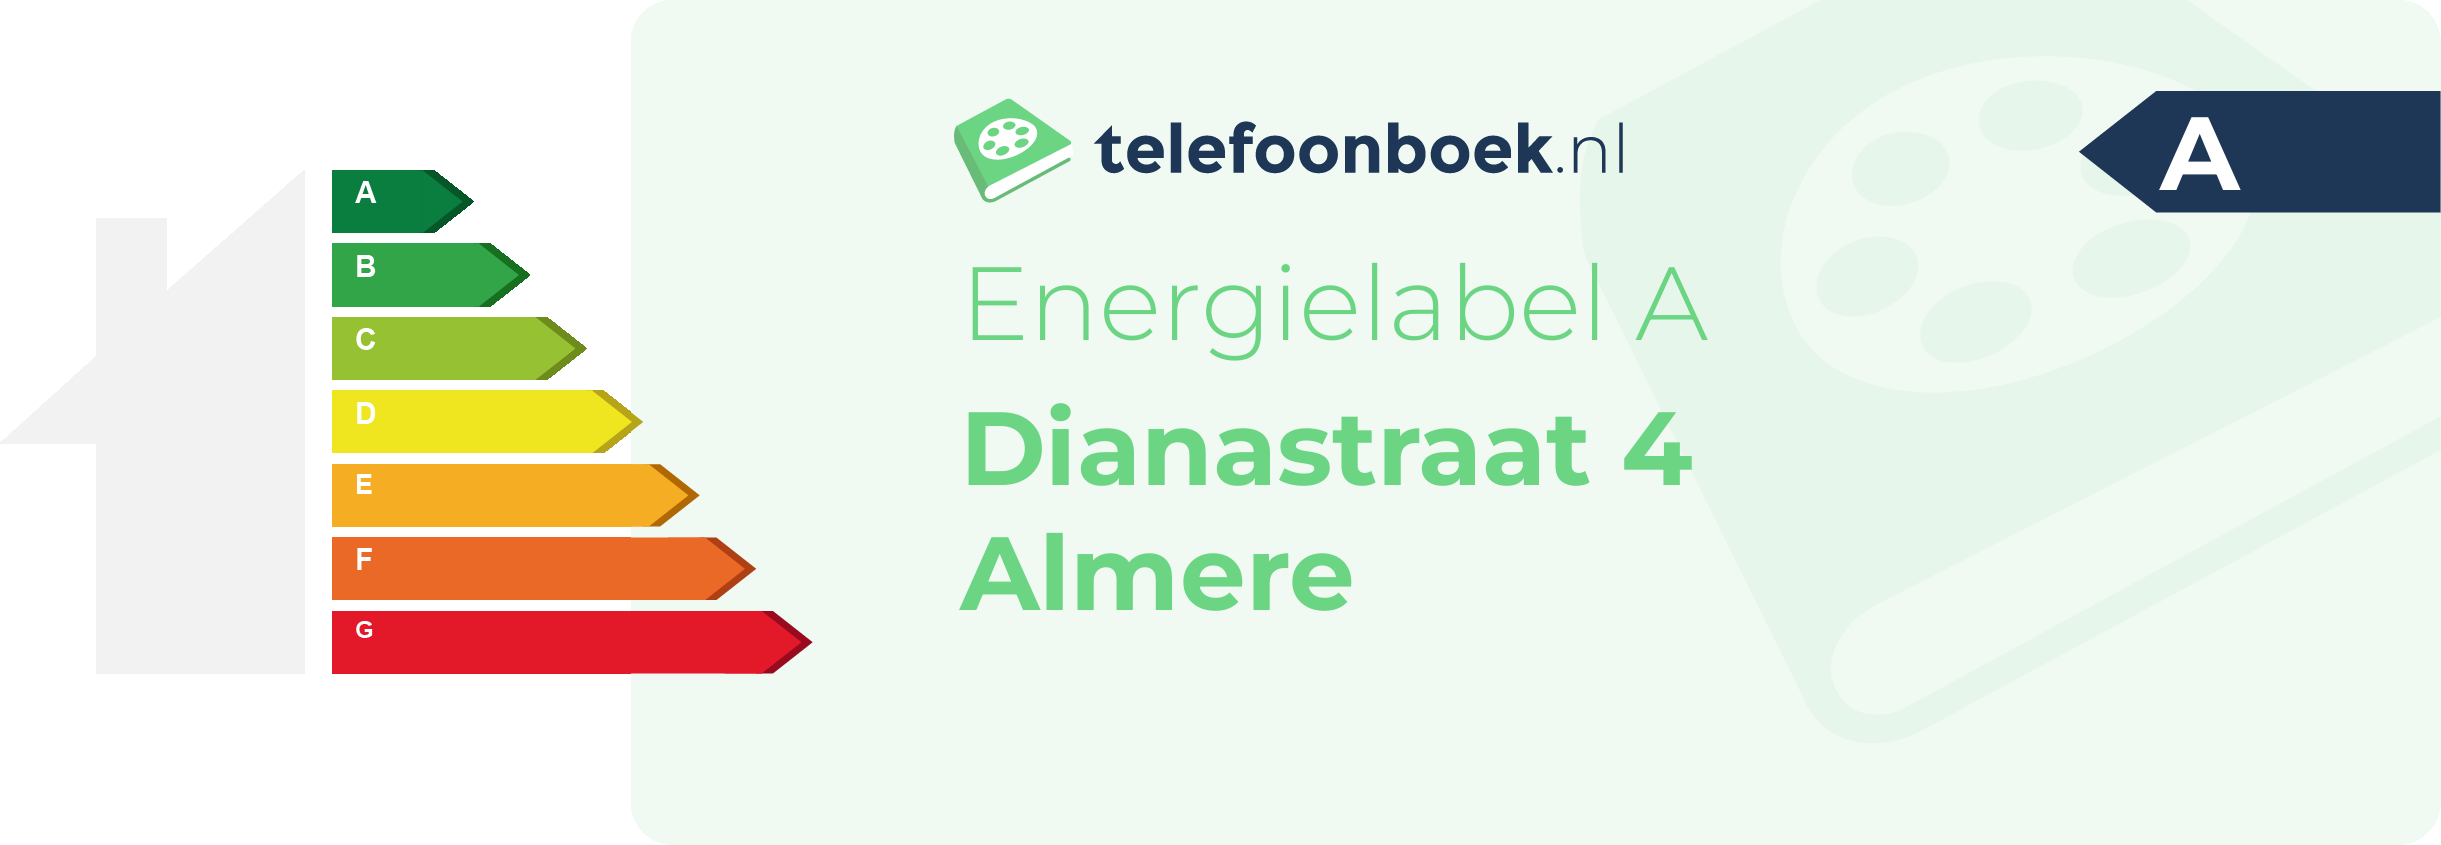 Energielabel Dianastraat 4 Almere